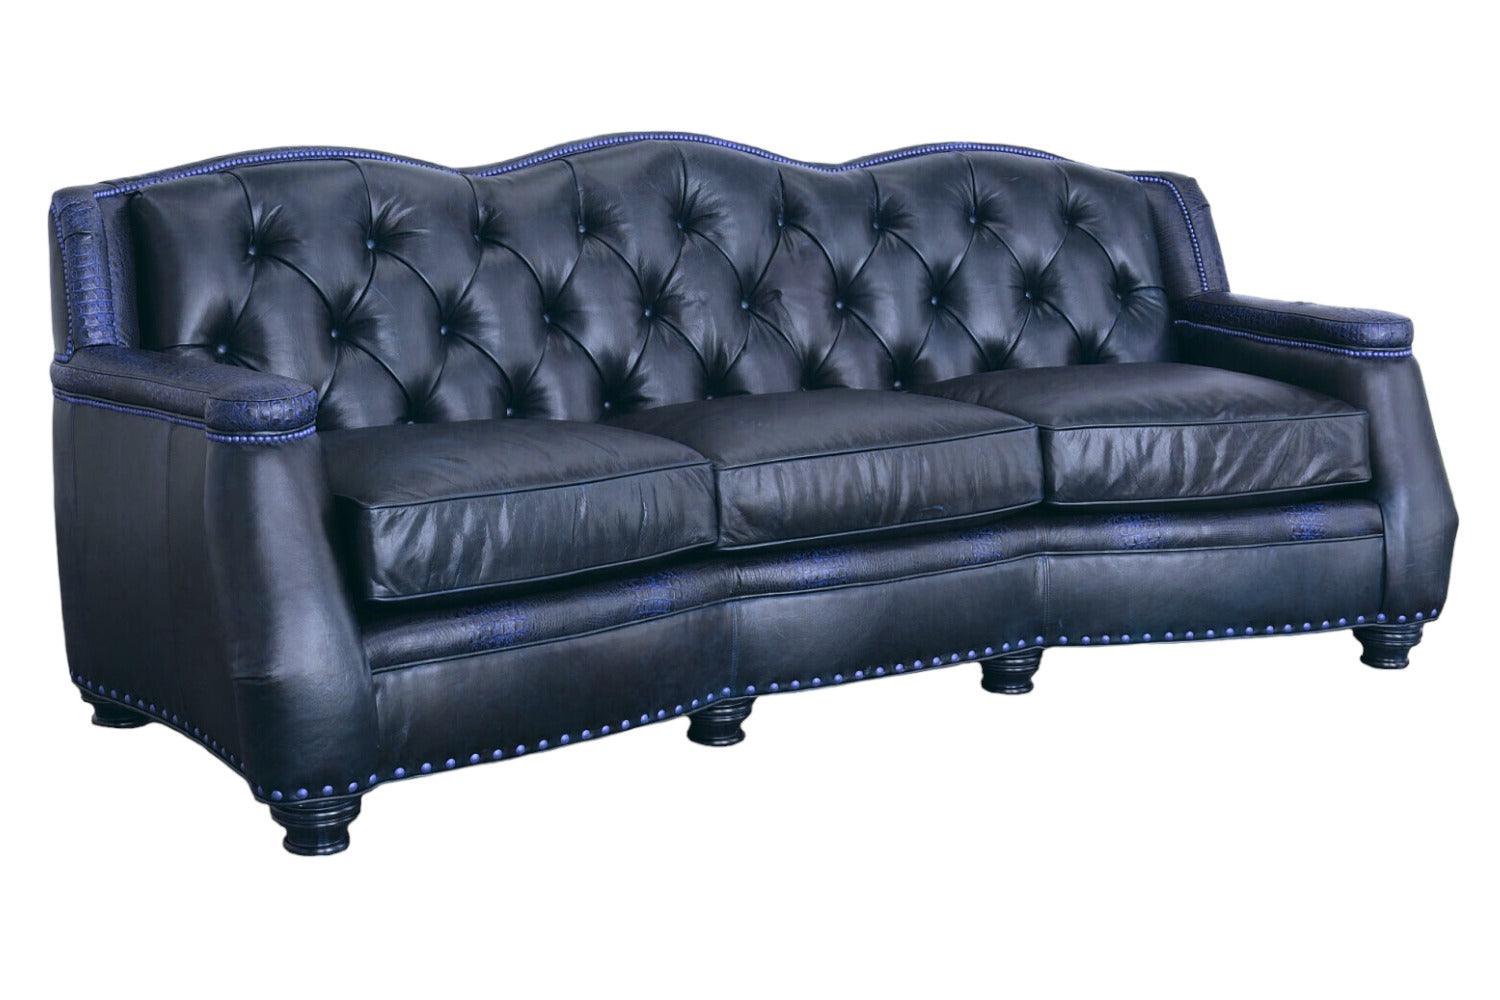 Expert Insights on Luxurious Aniline Leather Furniture - Uptown Sebastian